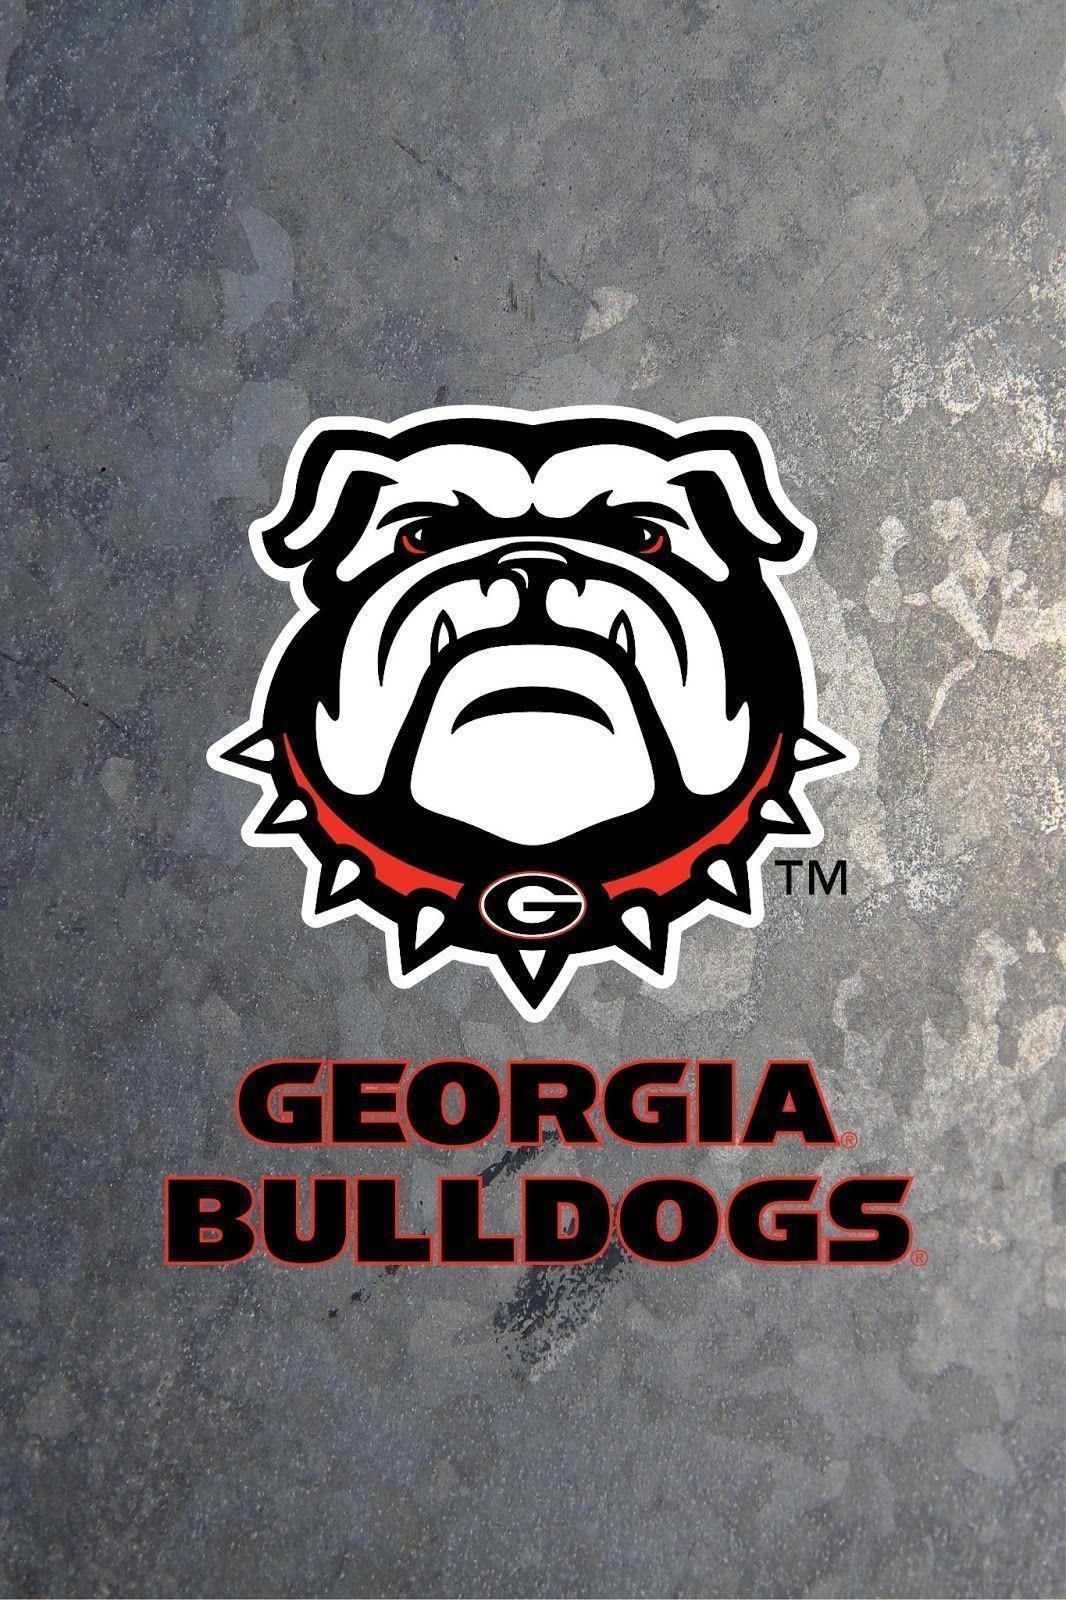 Latest Georgia Bulldogs Football Wallpaper FULL HD 1920×1080 For PC Background. Georgia bulldogs football, Georgia bulldogs, Bulldogs football